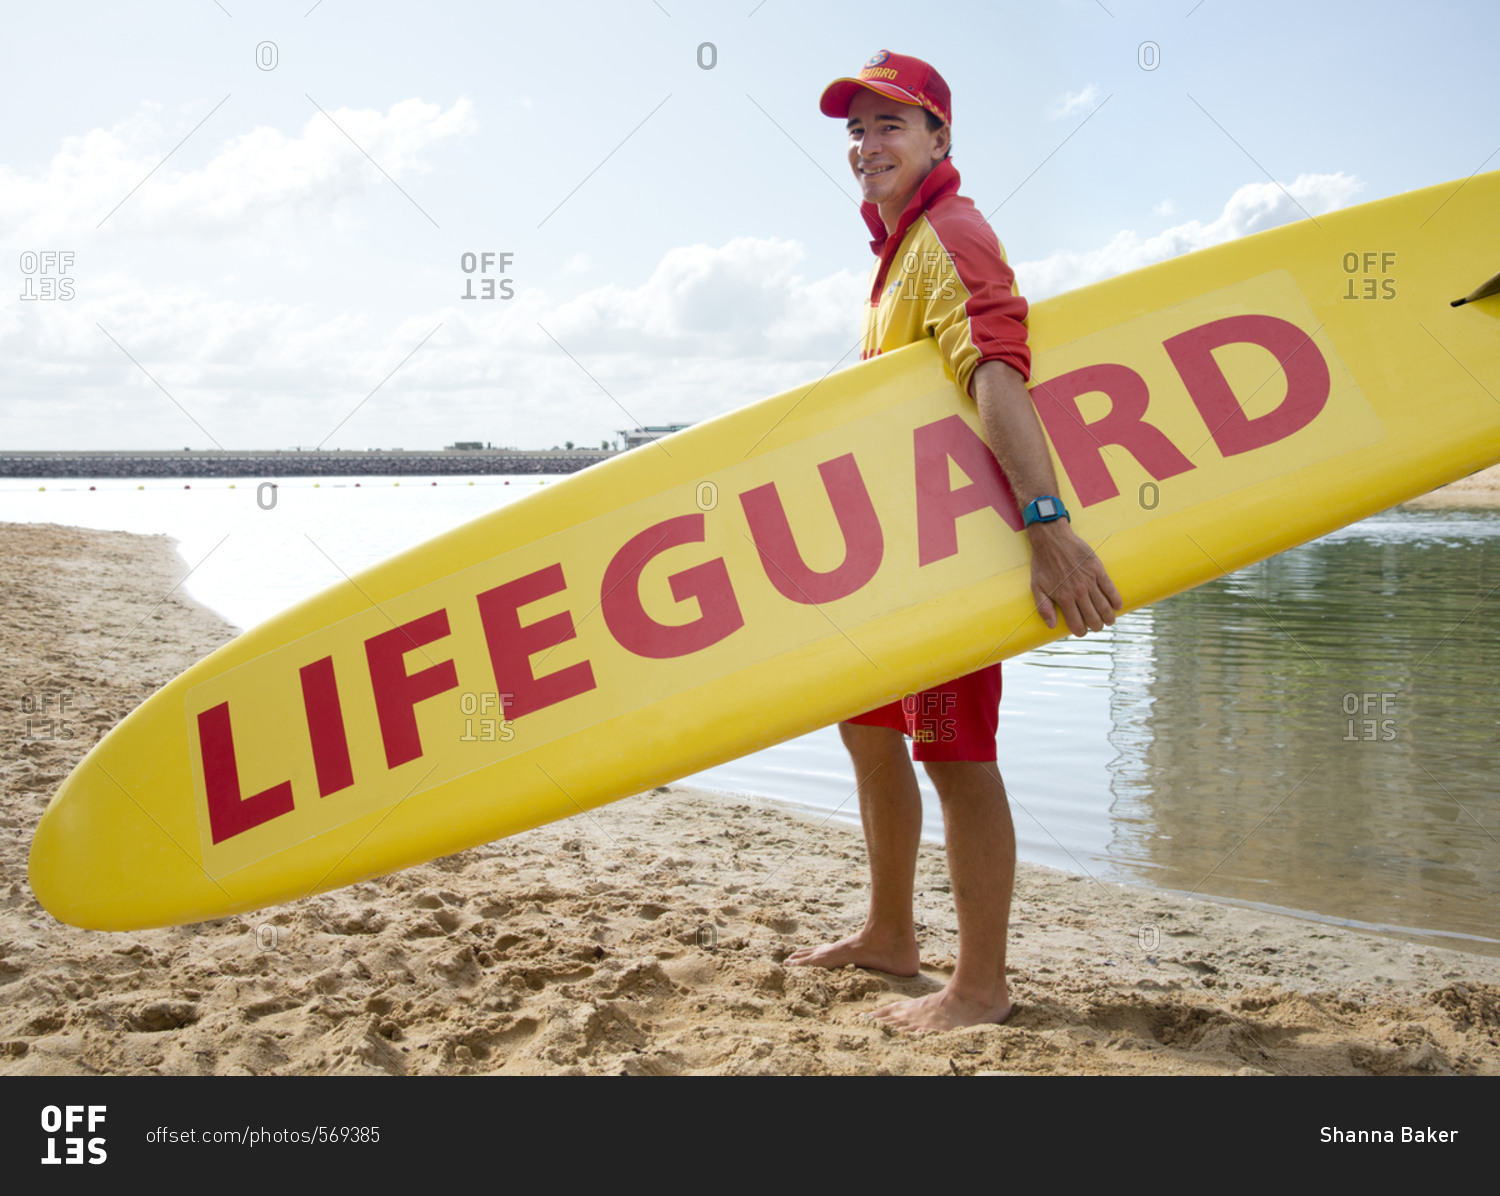 Lifeguard holding a surfboard standing on the beach in Darwin, Australia